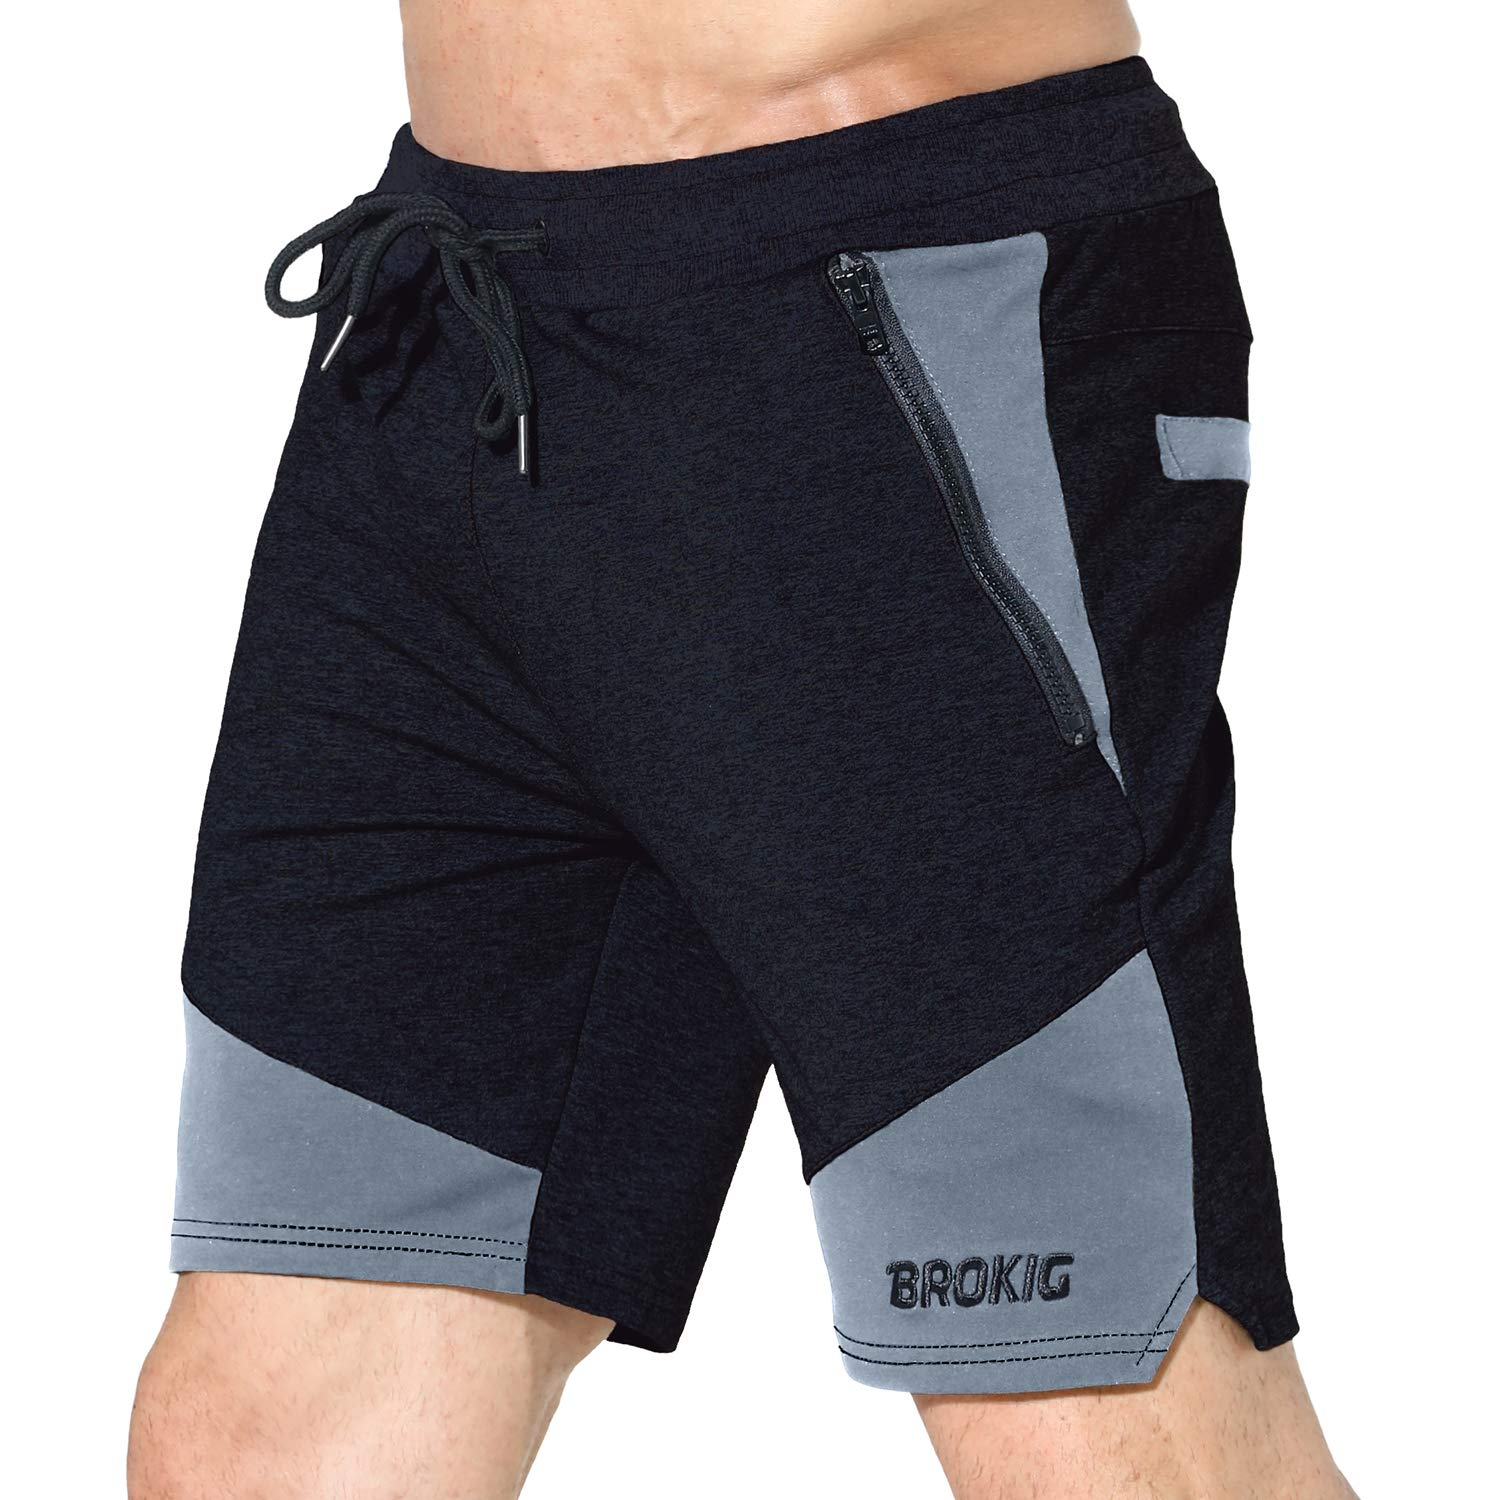 BROKIG Mens Running shorts,Gym Training Sport Shorts with Sidelock Zip pockets 